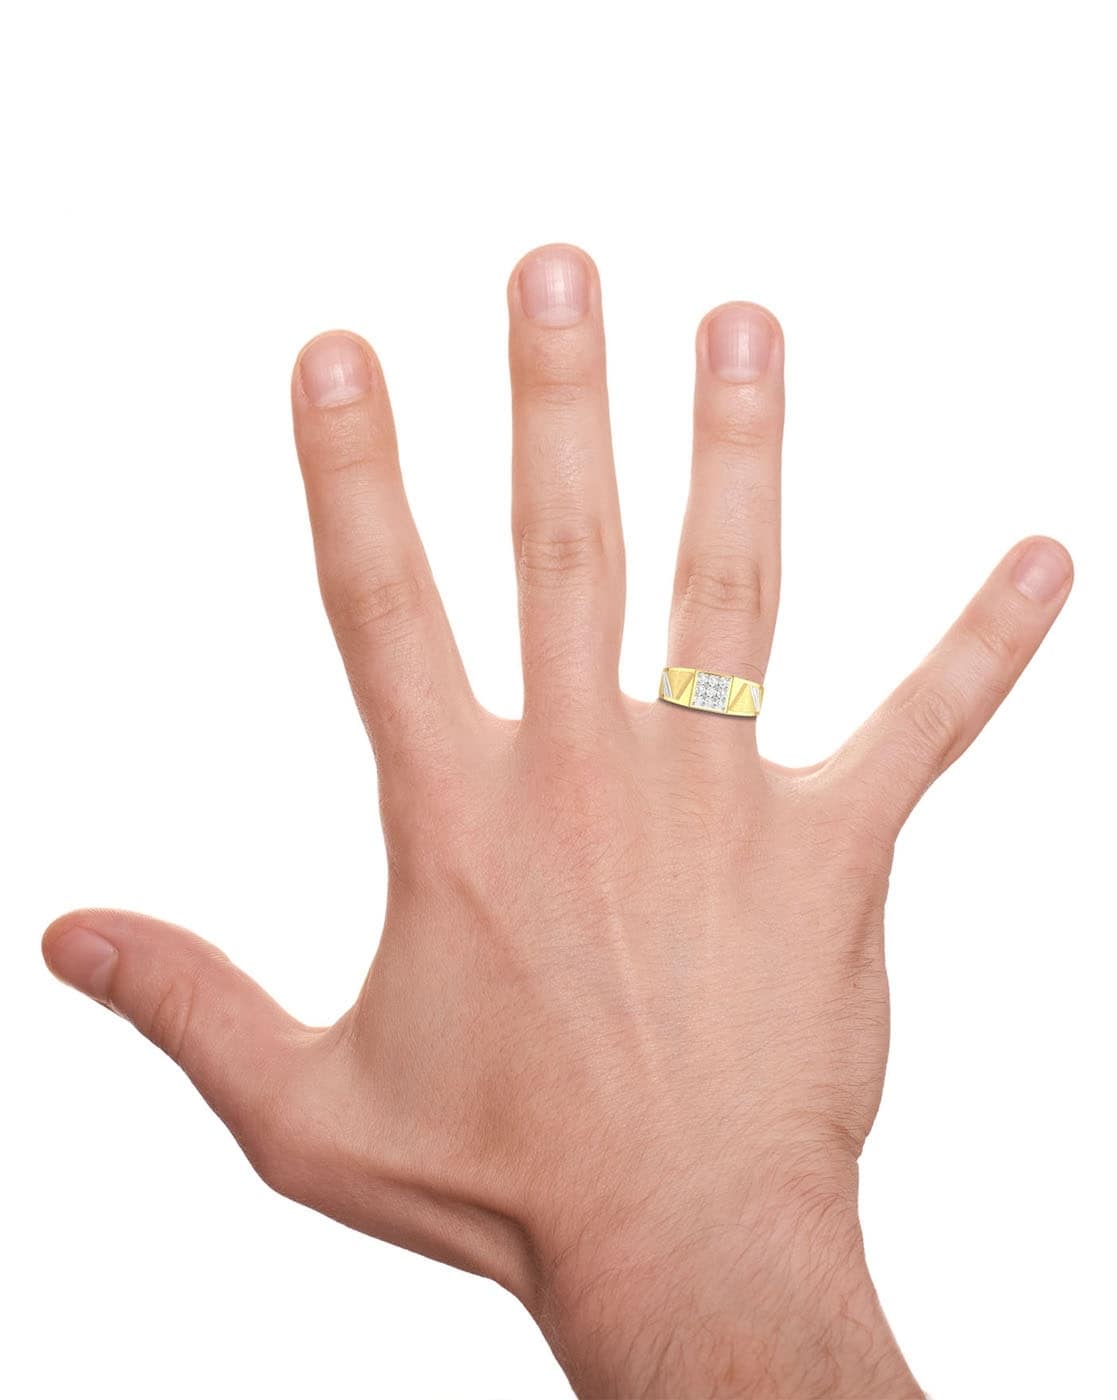 Gold Rings For Men - Buy Gents Gold Rings Online at Best Prices in India |  Flipkart.com